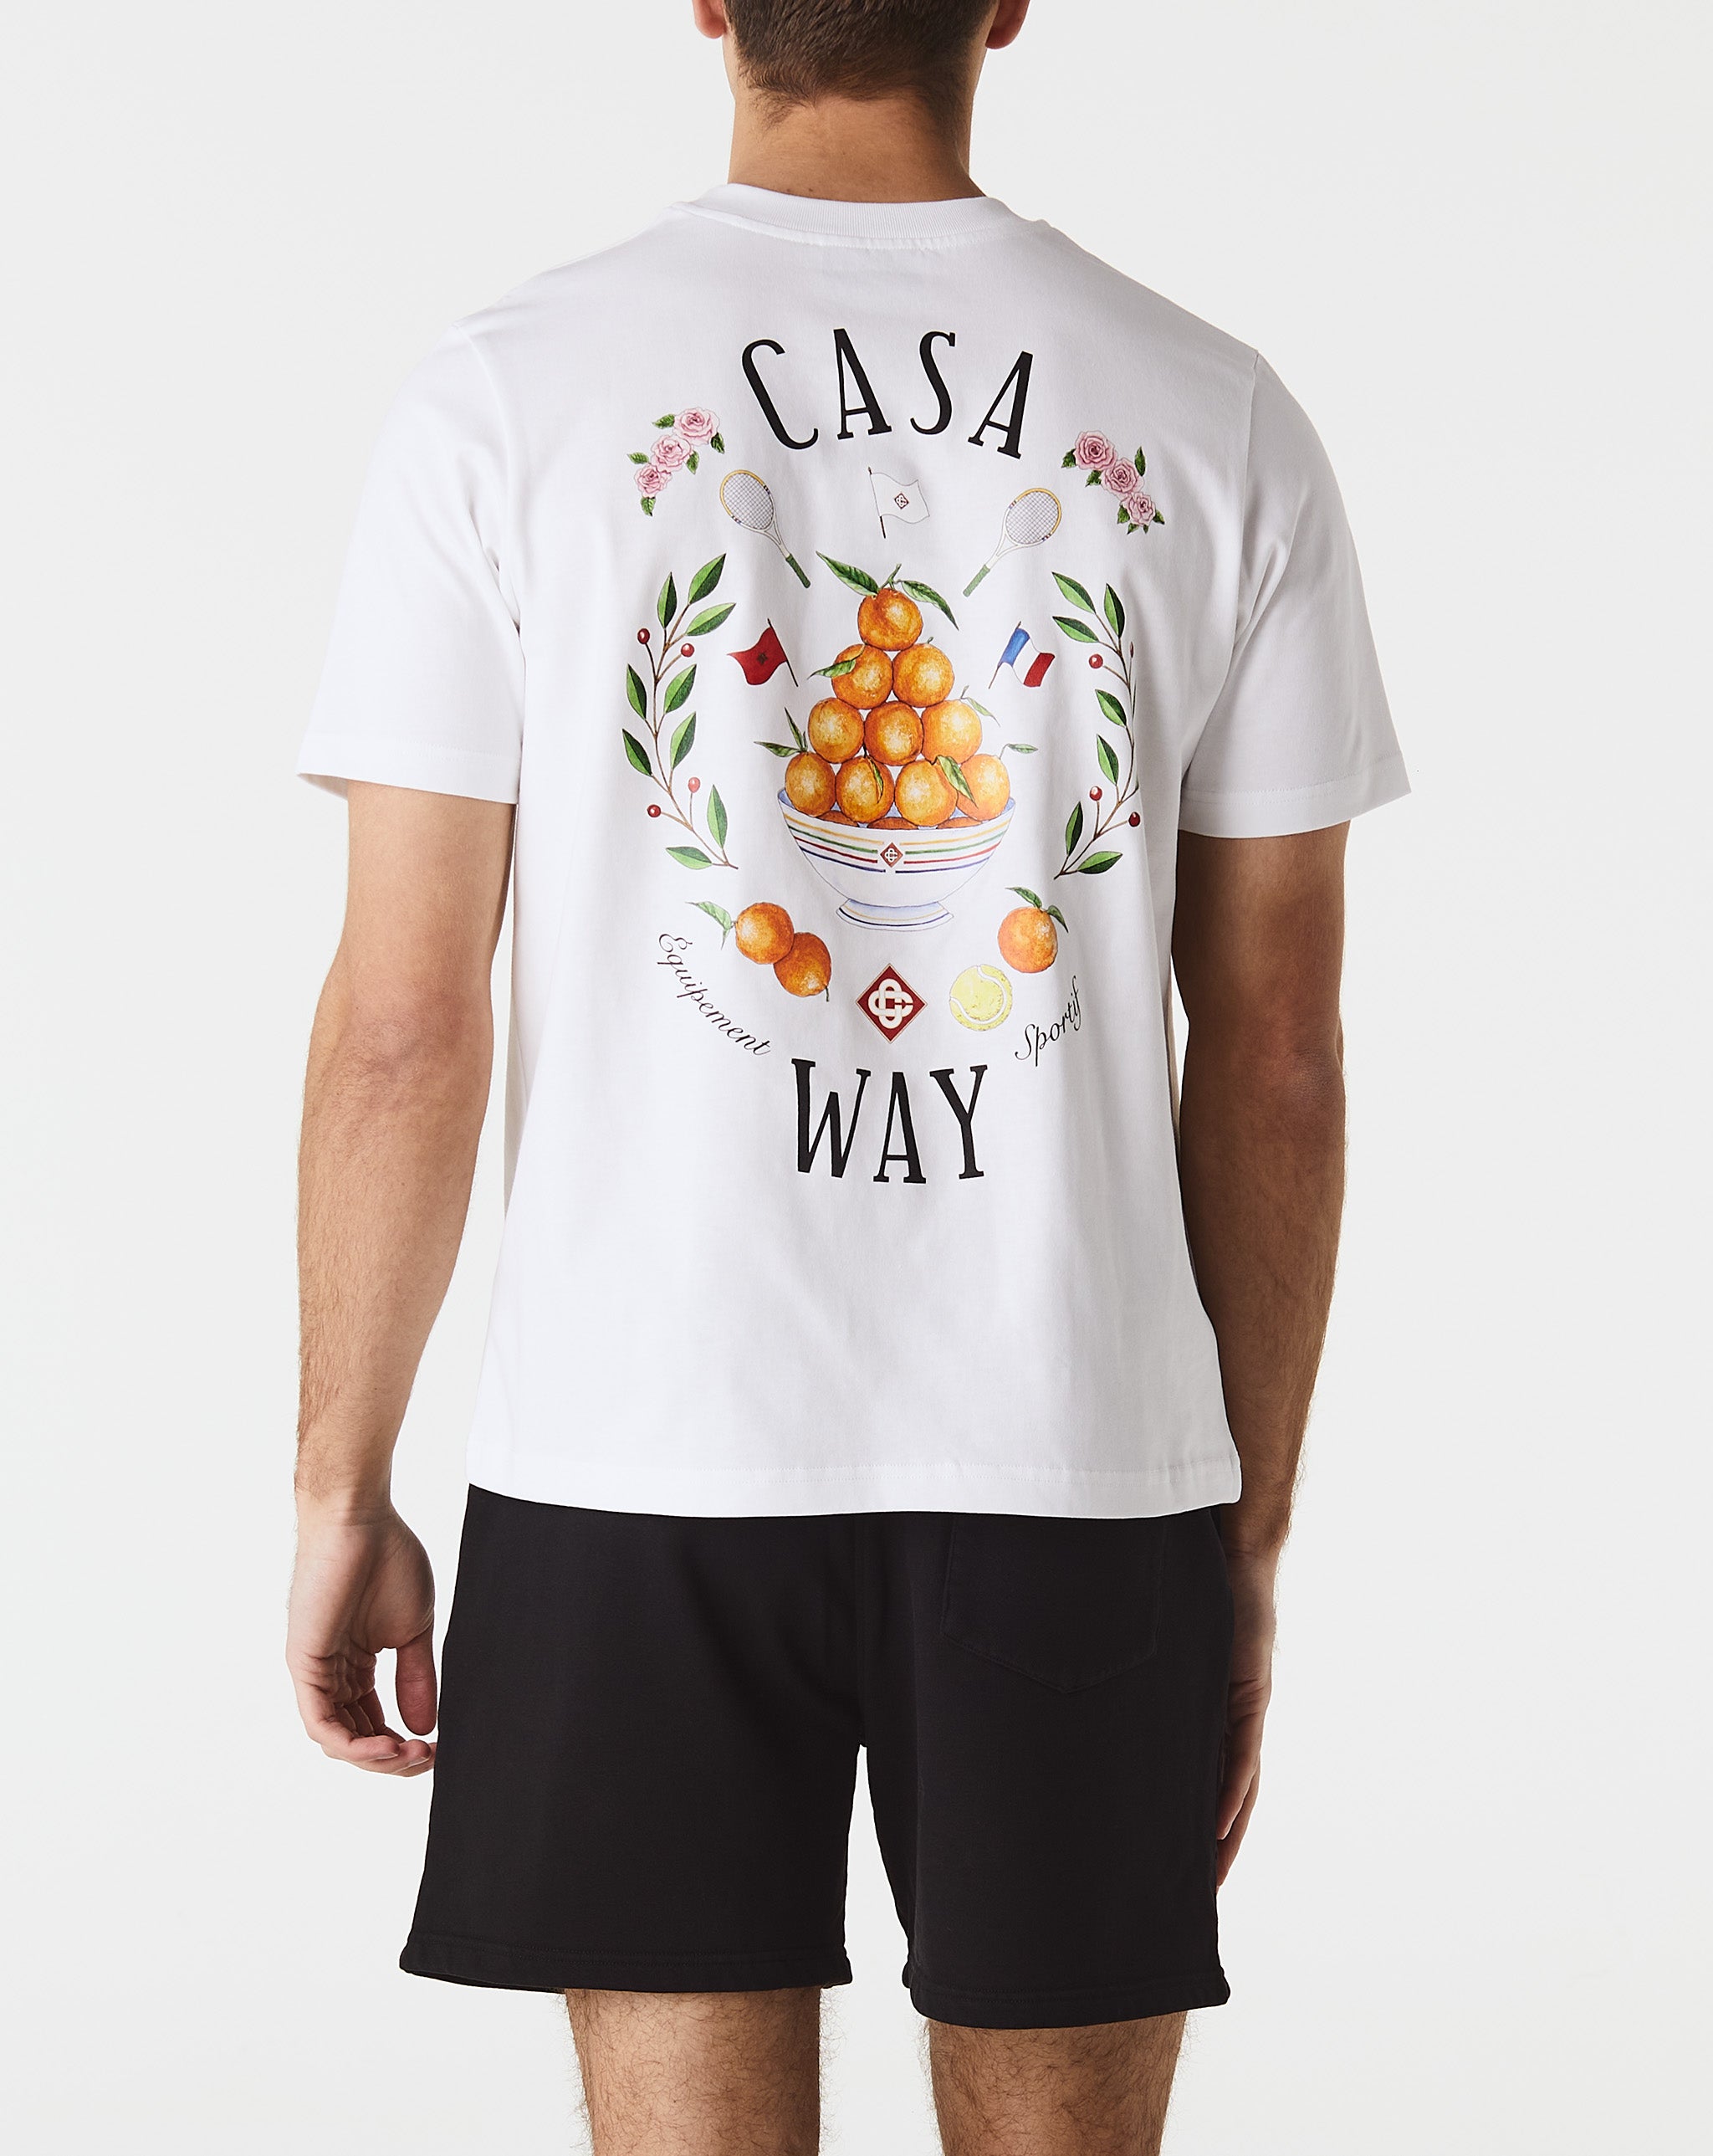 Casablanca Casa Way Printed T-Shirt  - XHIBITION